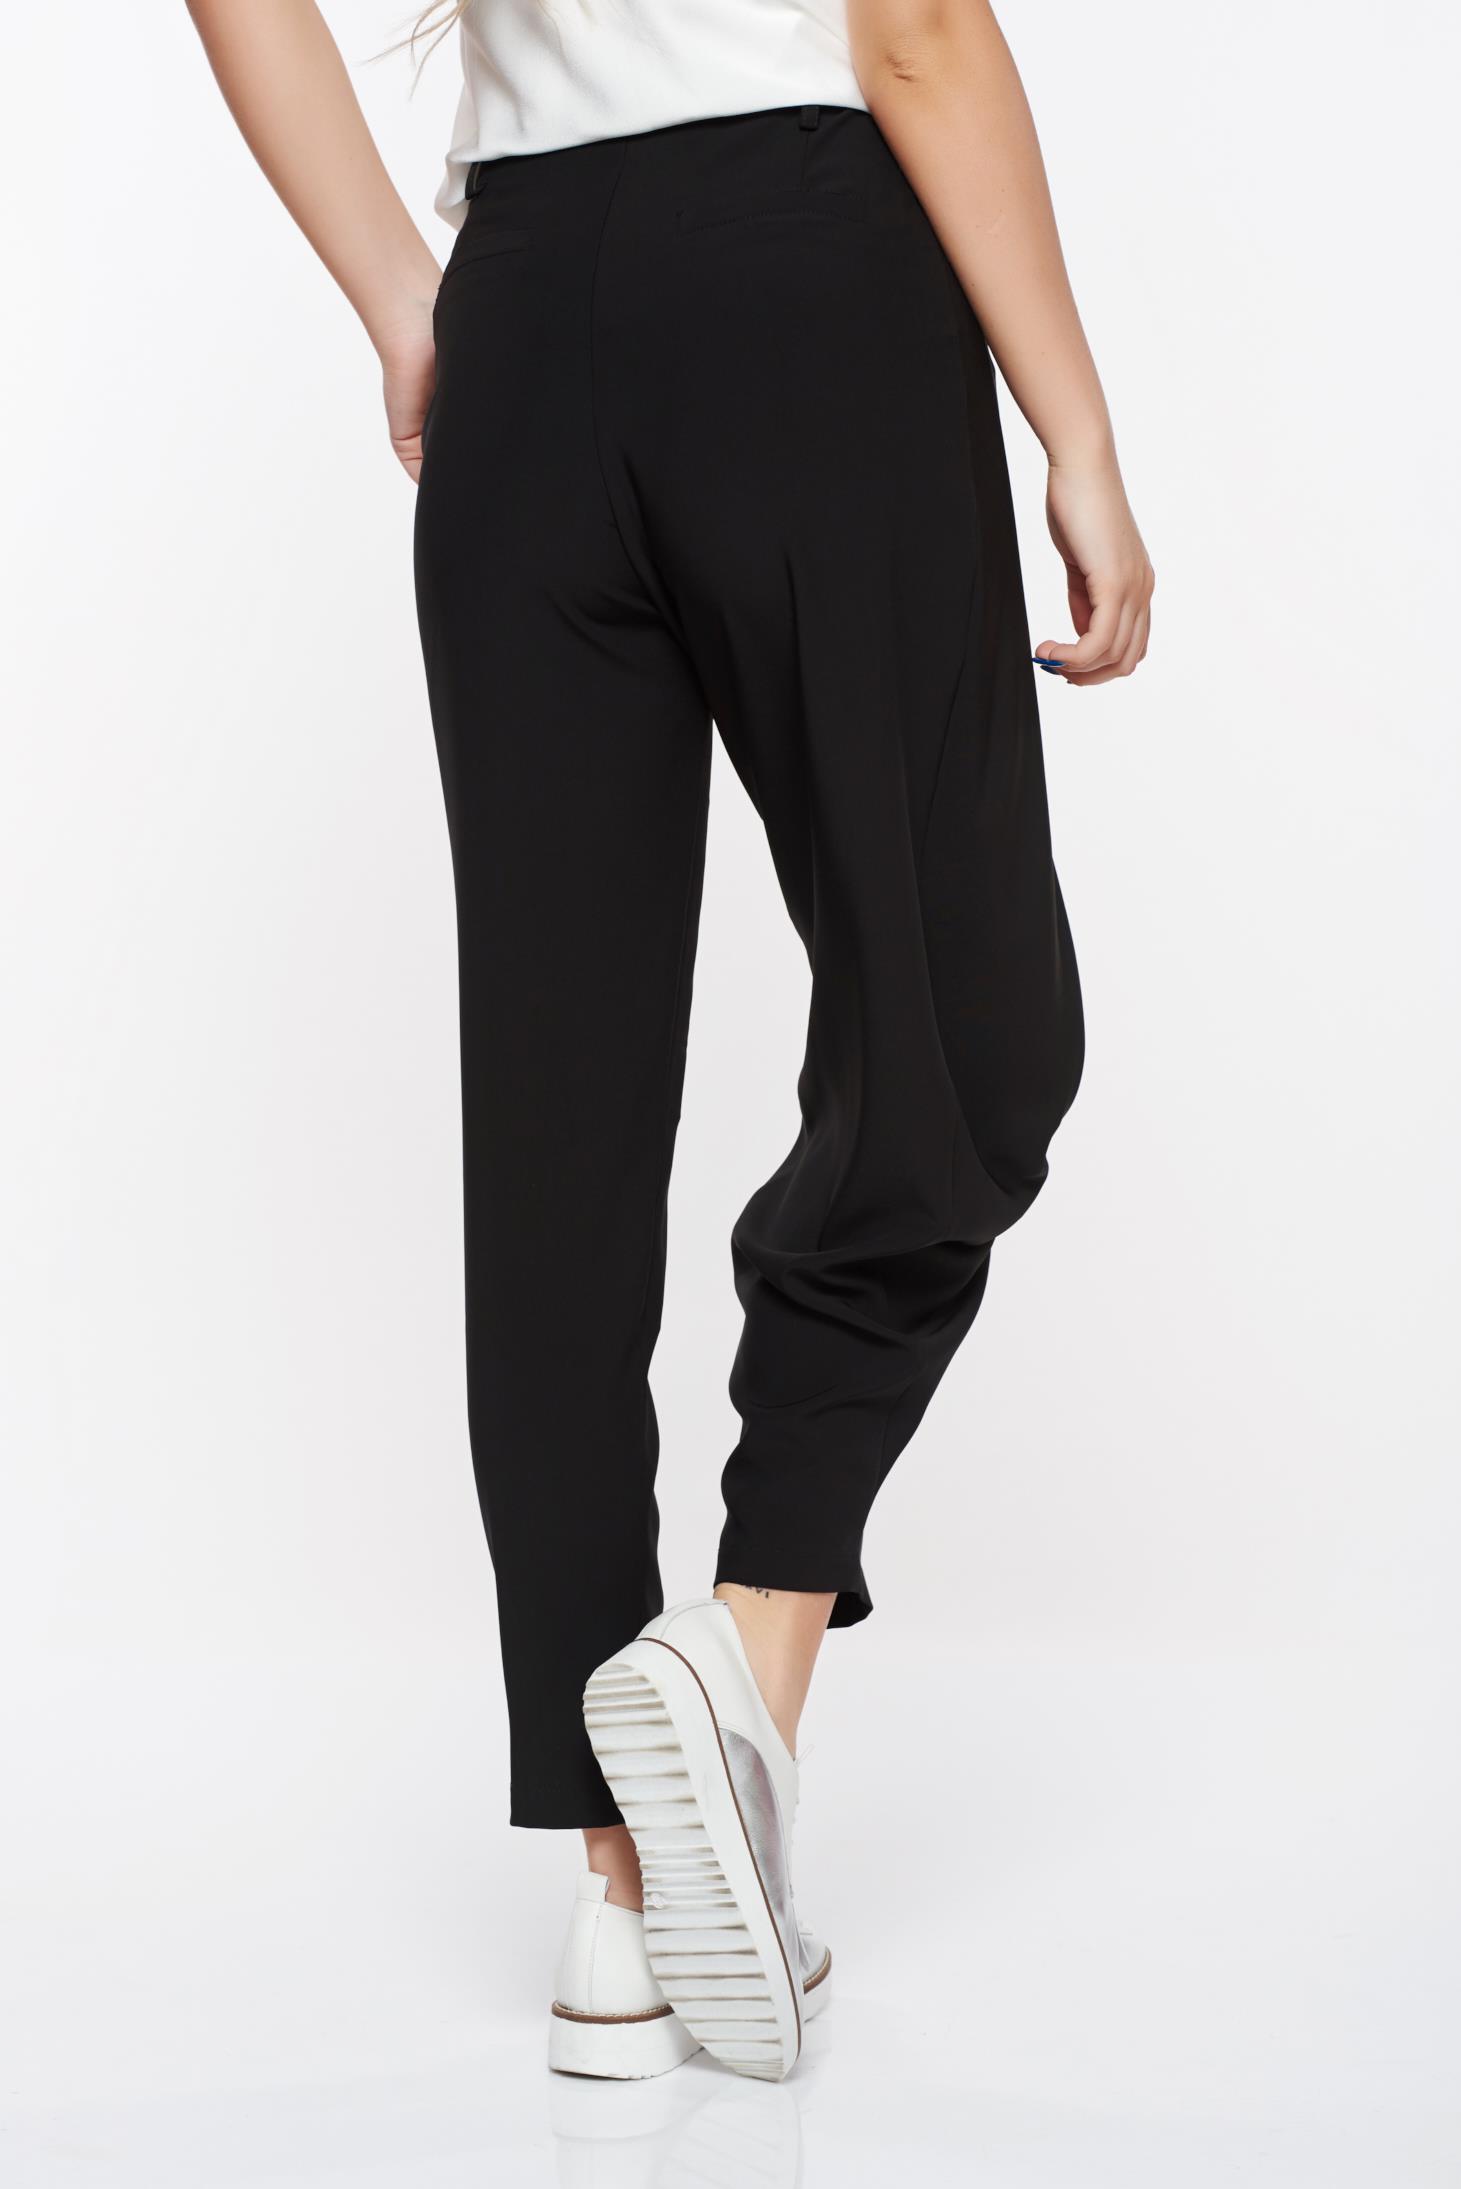 PrettyGirl black elegant trousers with medium waist airy fabric with pockets 2 - StarShinerS.com